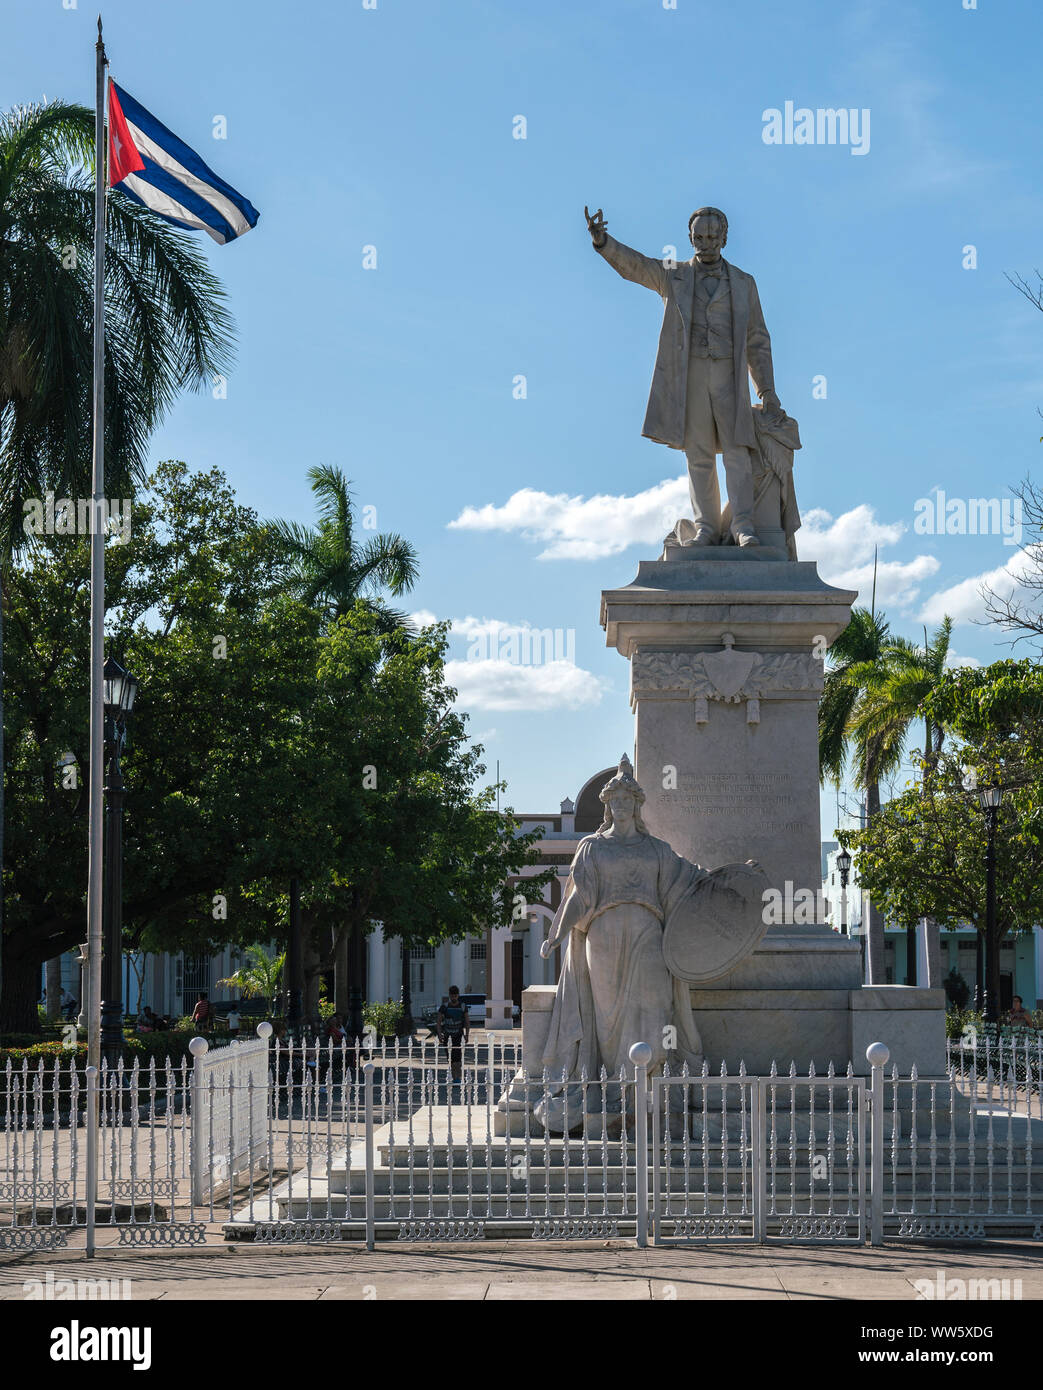 Statue of JosÃ© MartÃ, Cuban poet and author, in JosÃ© MartÃ Park, Cienfuegos, Cuba, beside him blowing the flag of Cuba Stock Photo